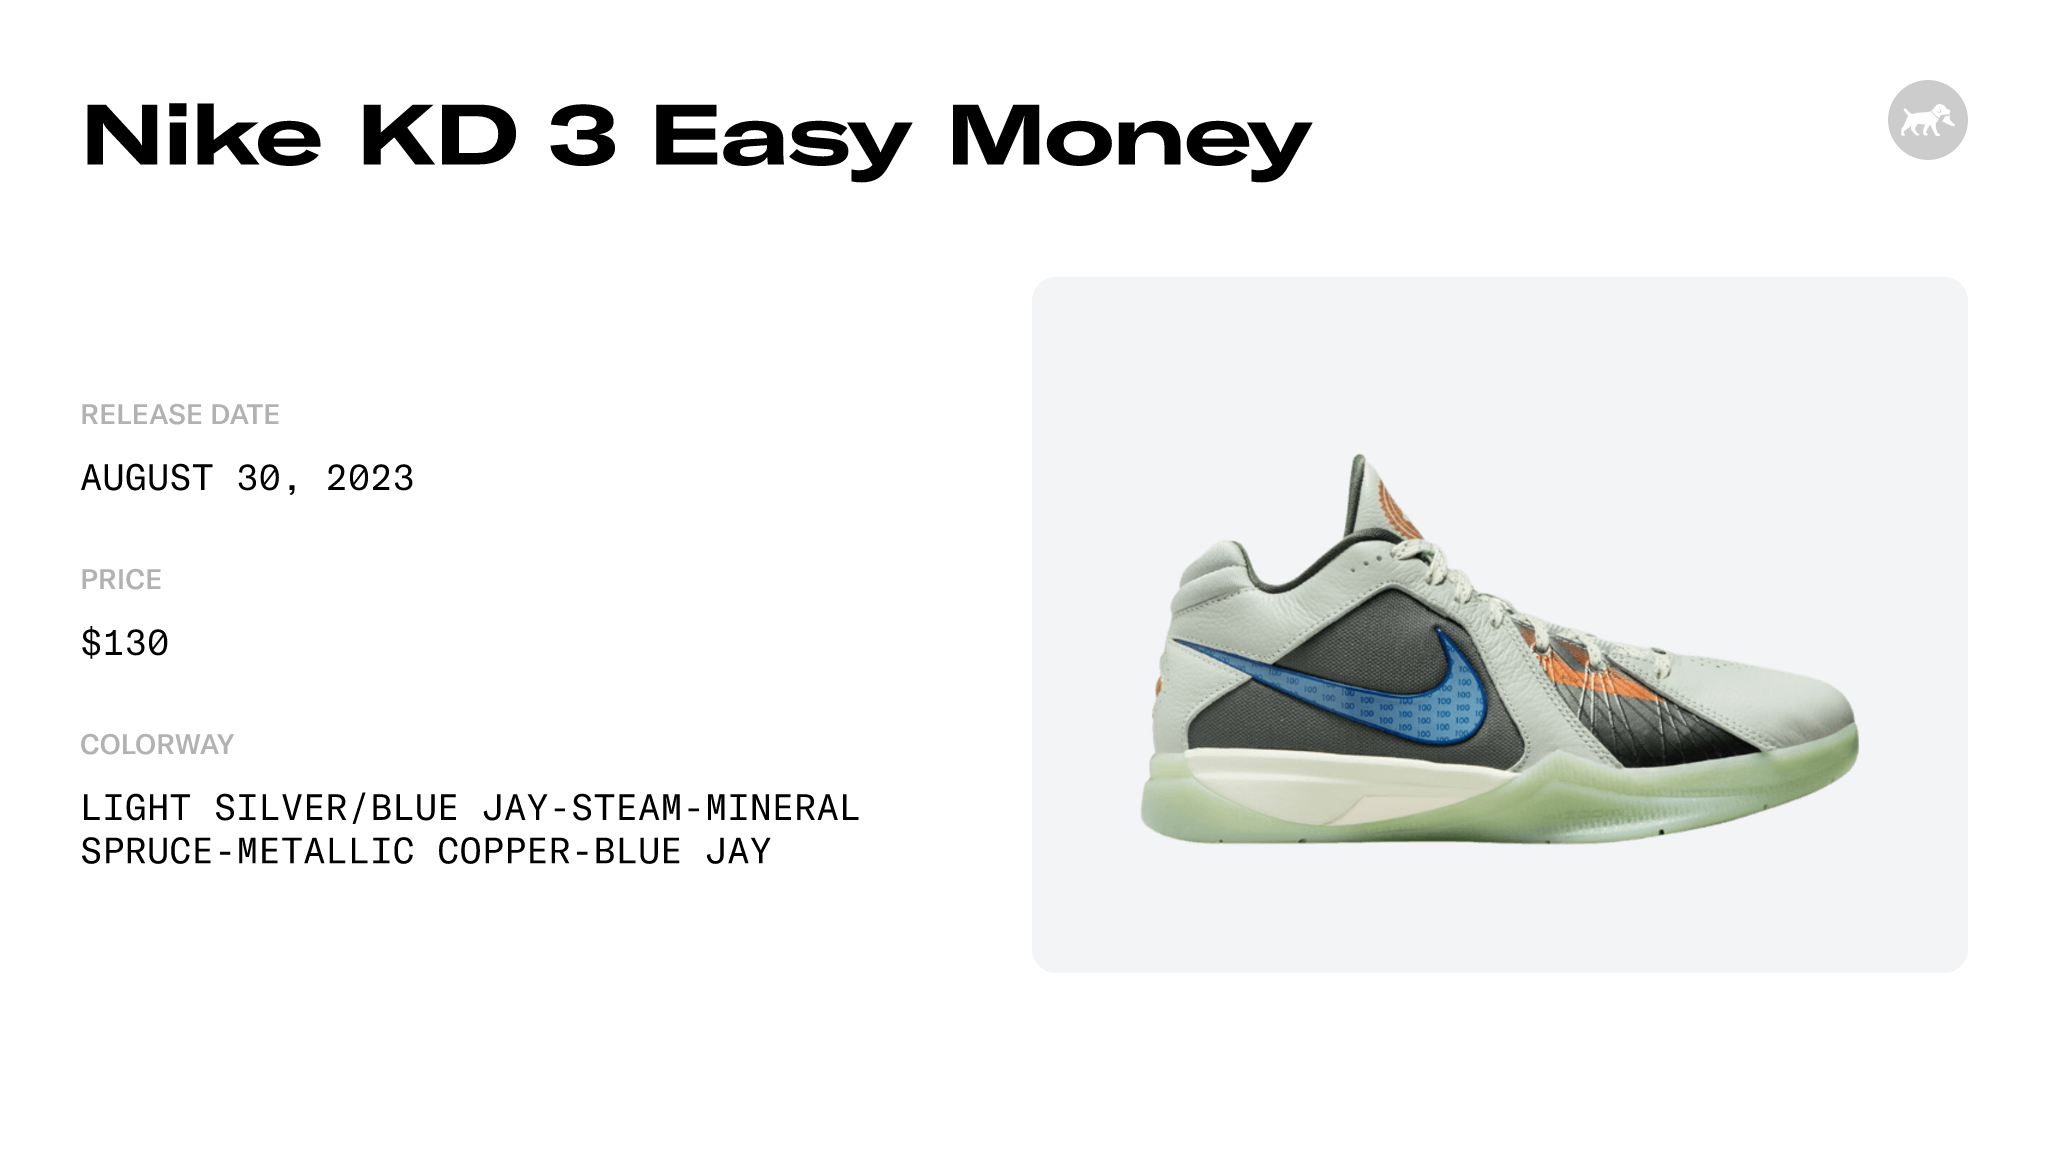 Nike KD 3 Easy Money - FJ0980-001 Raffles and Release Date